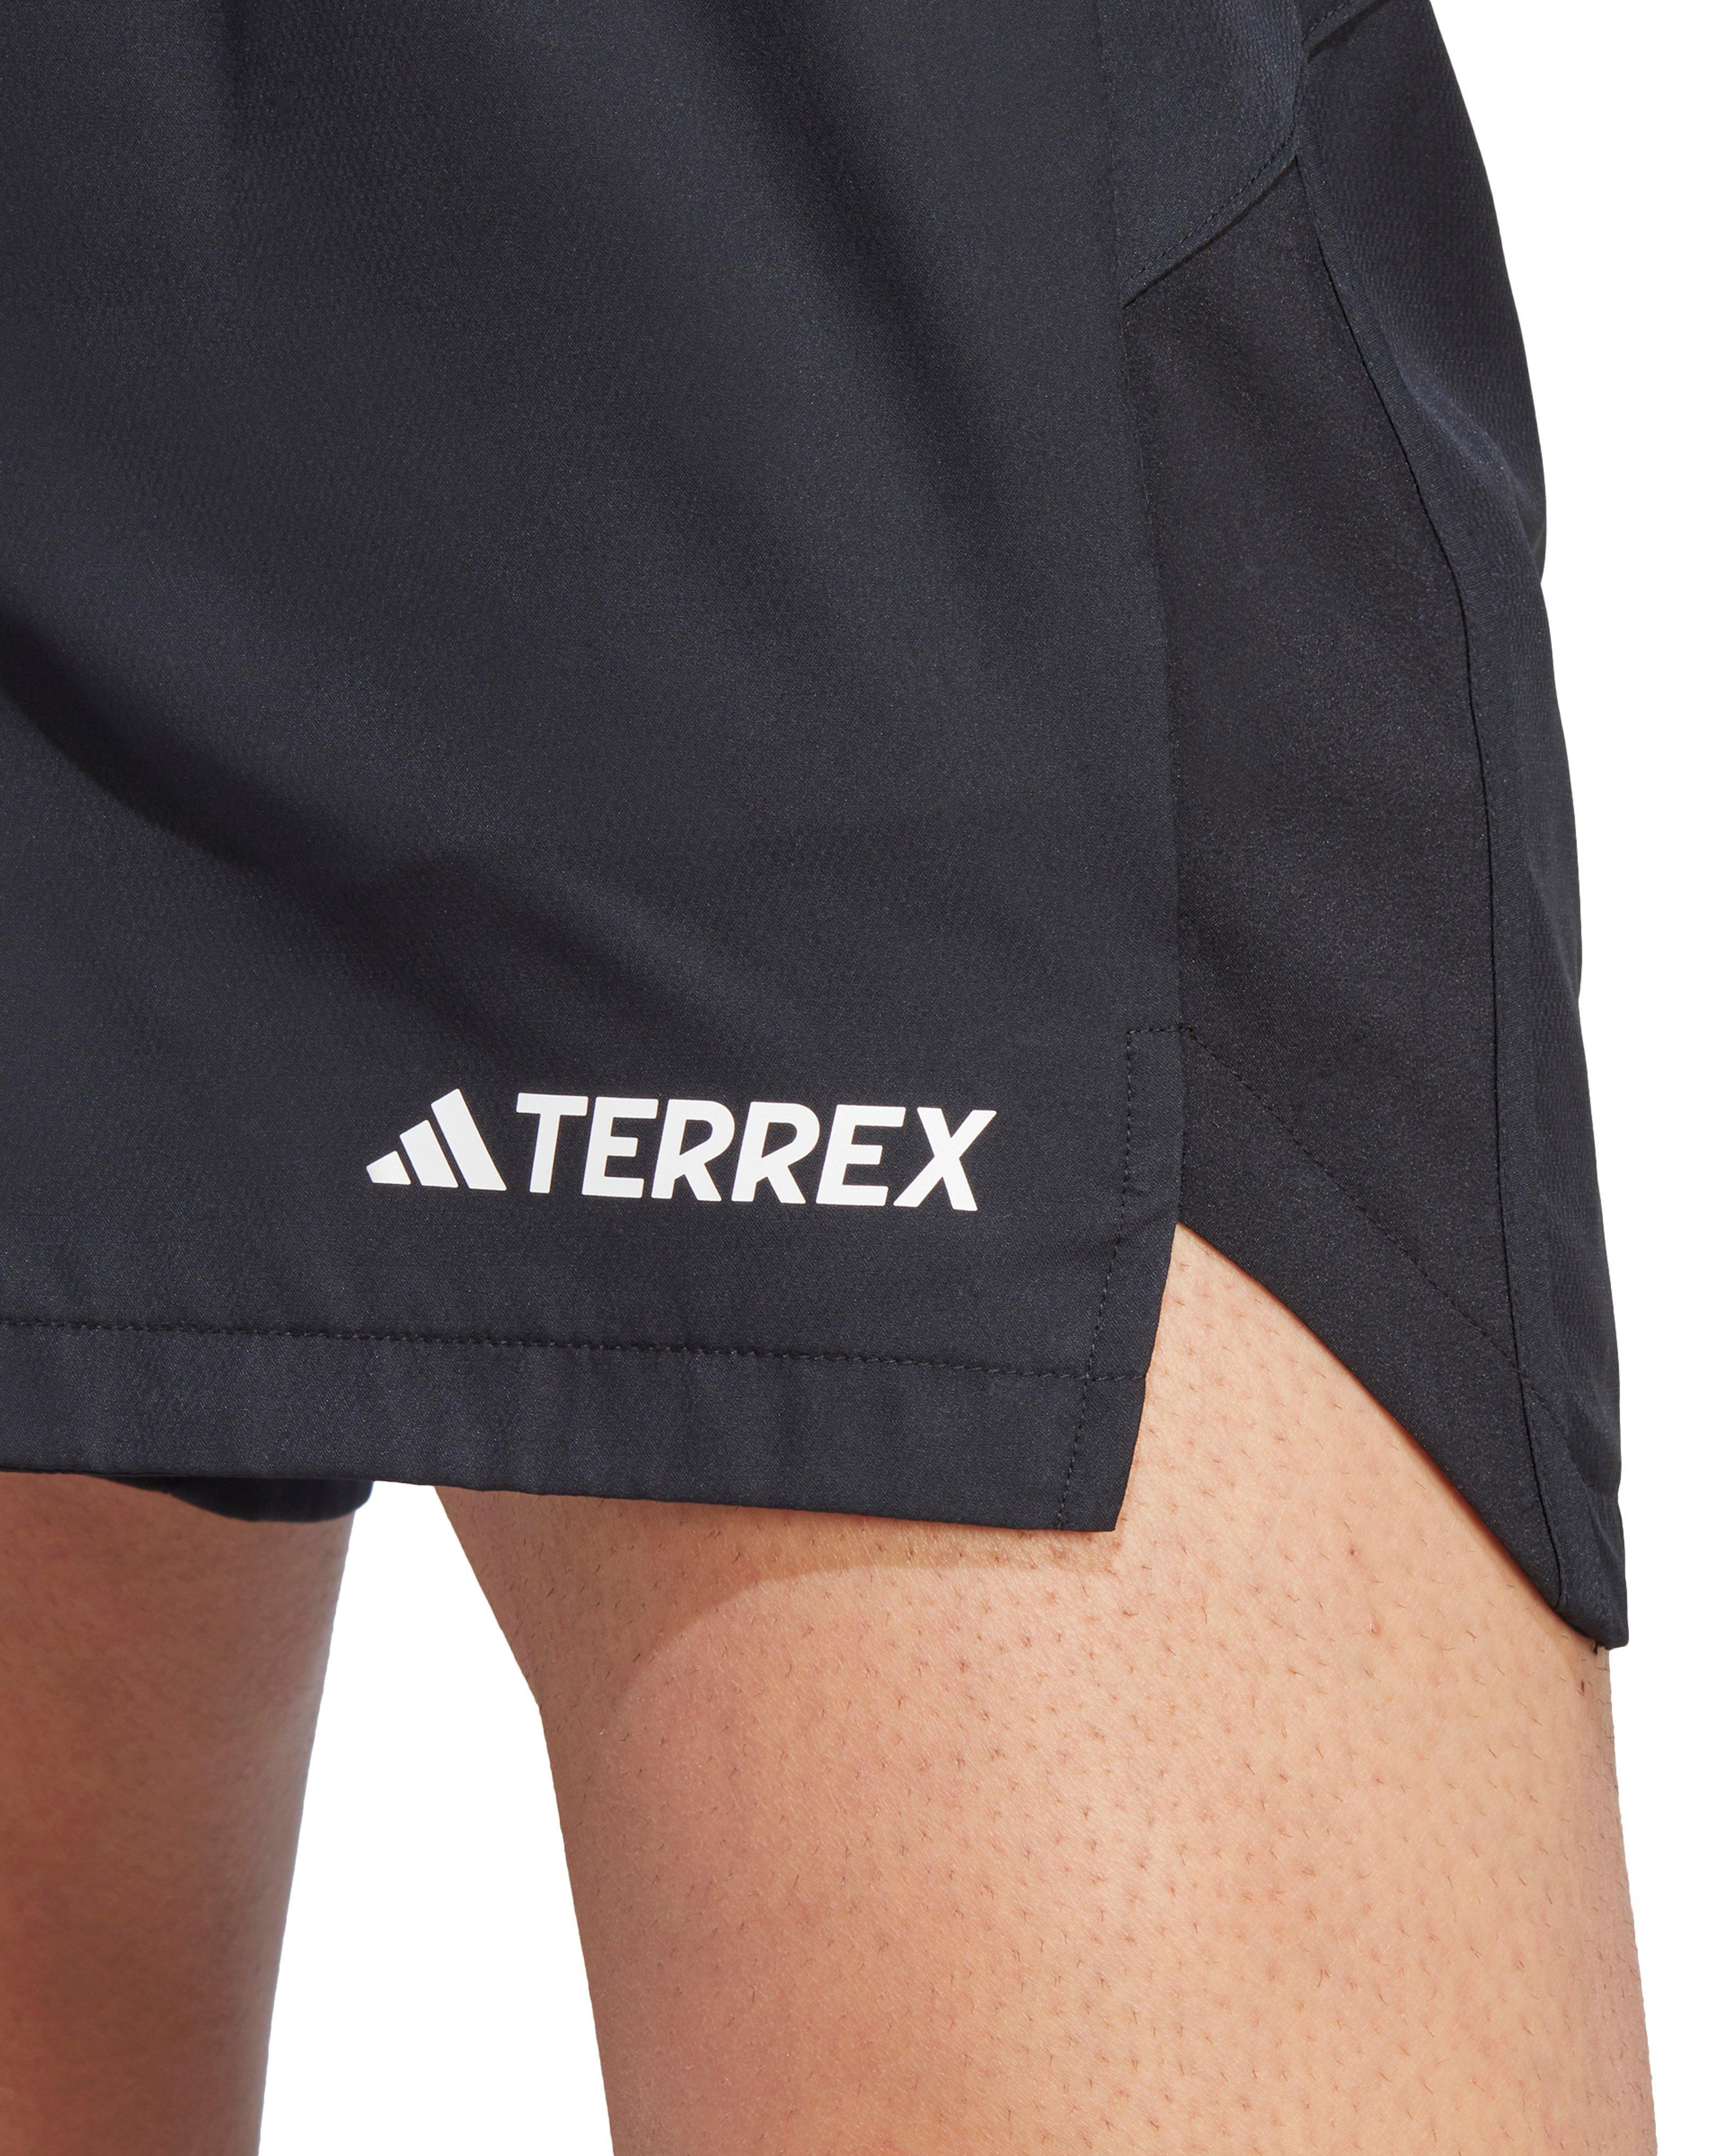 Adidas Men’s Terrex Trail Shorts -  Black